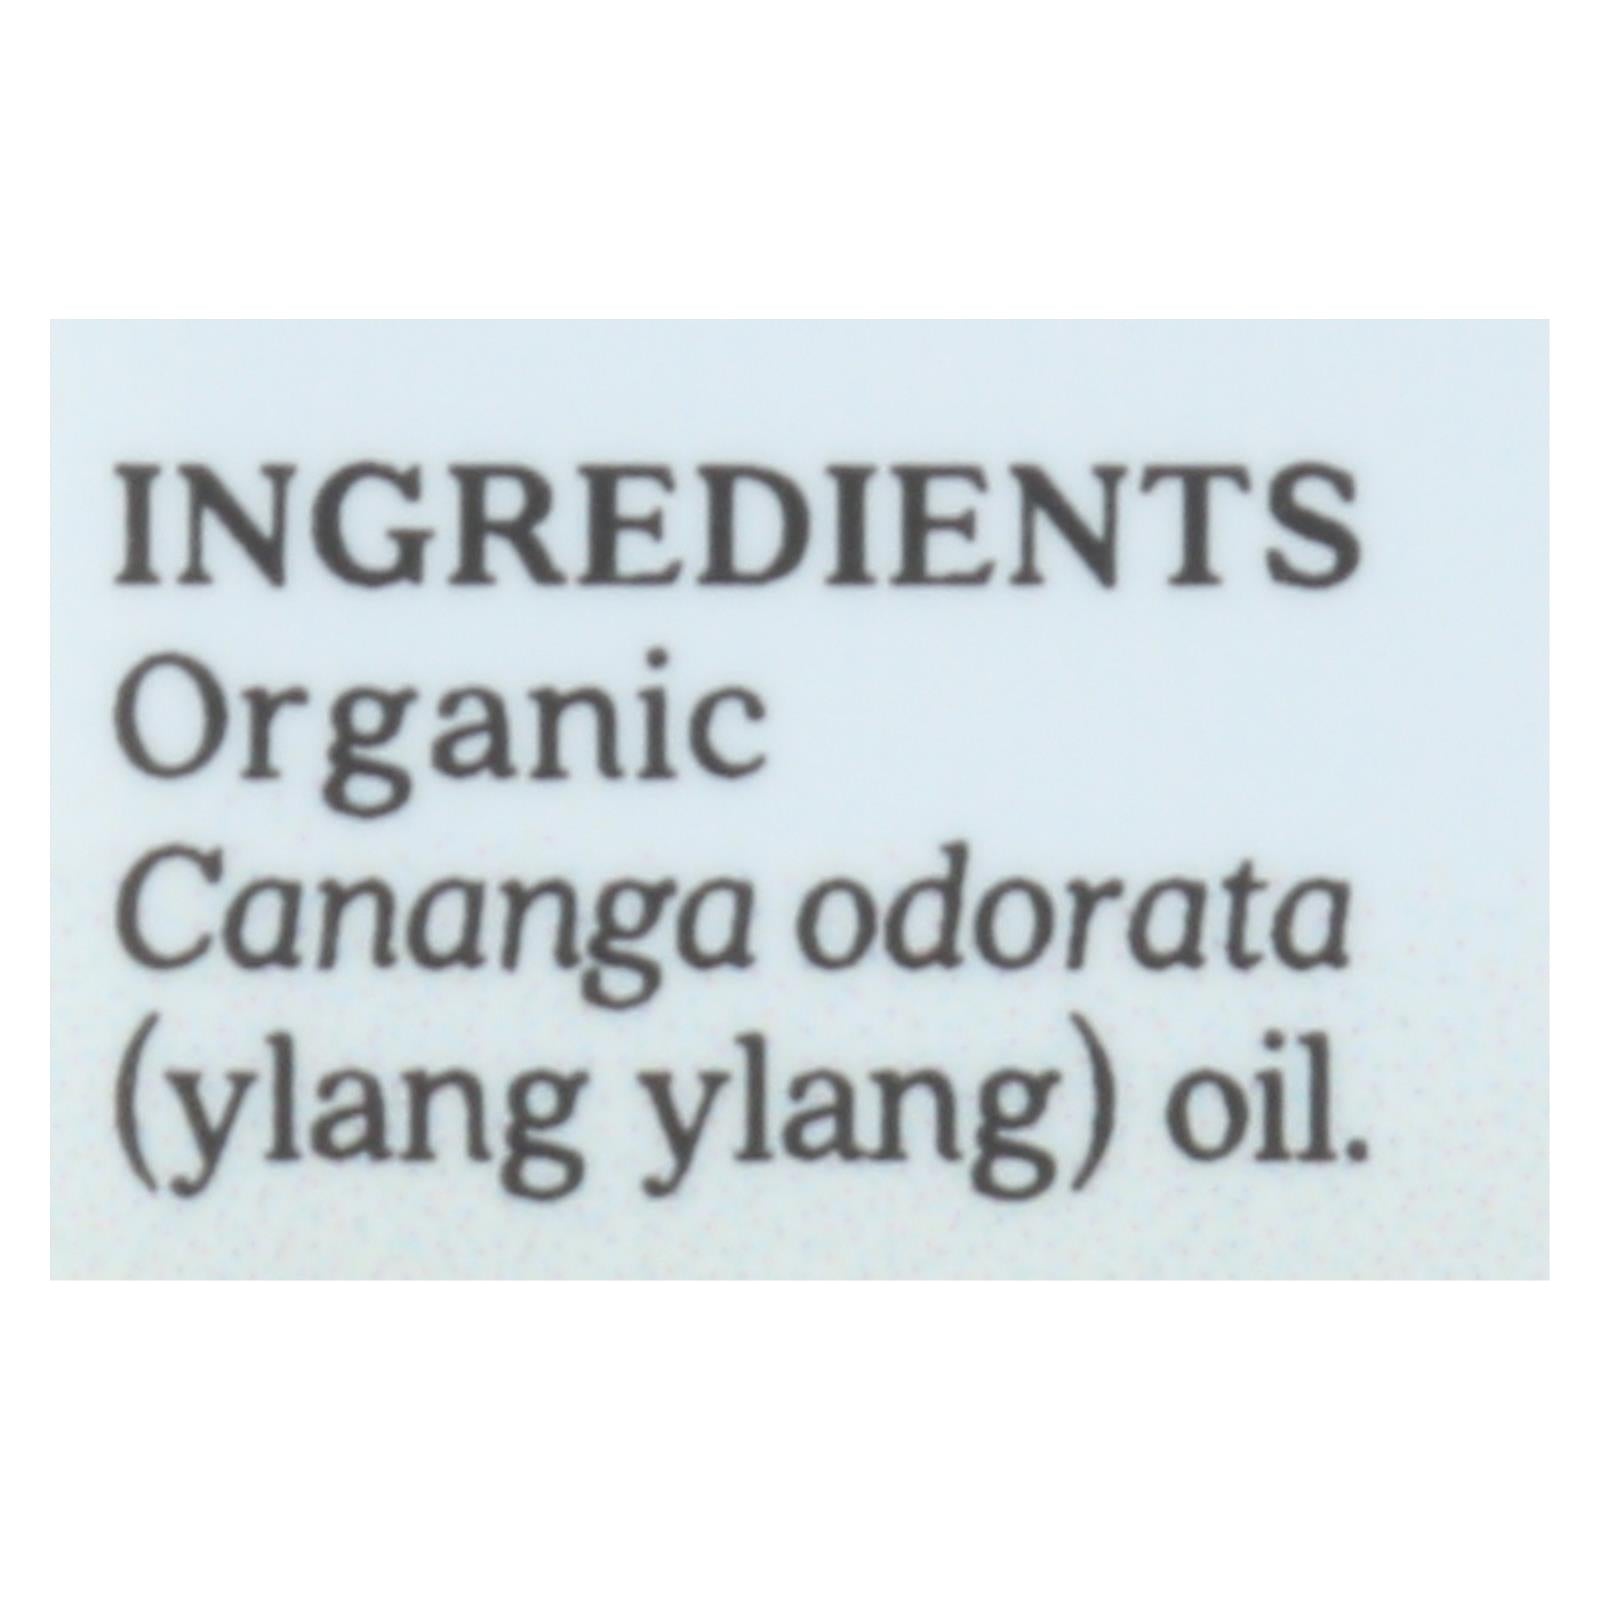 Aura Cacia - Organic Essential Oil - Ylang Ylang - .25 Oz